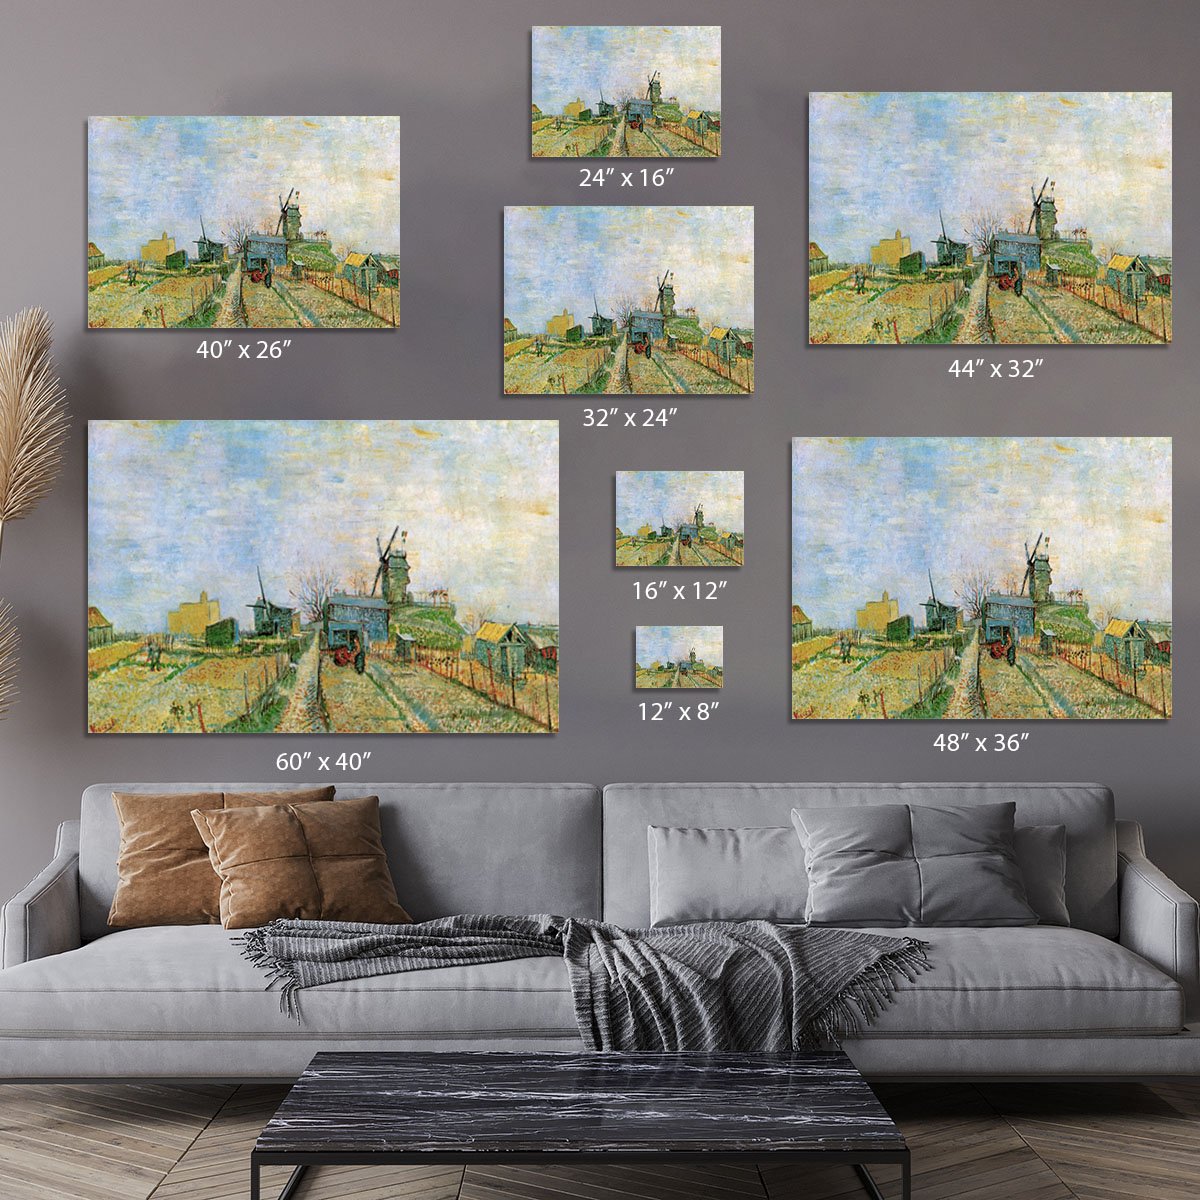 Vegetable Garden in Montmartre by Van Gogh Canvas Print or Poster